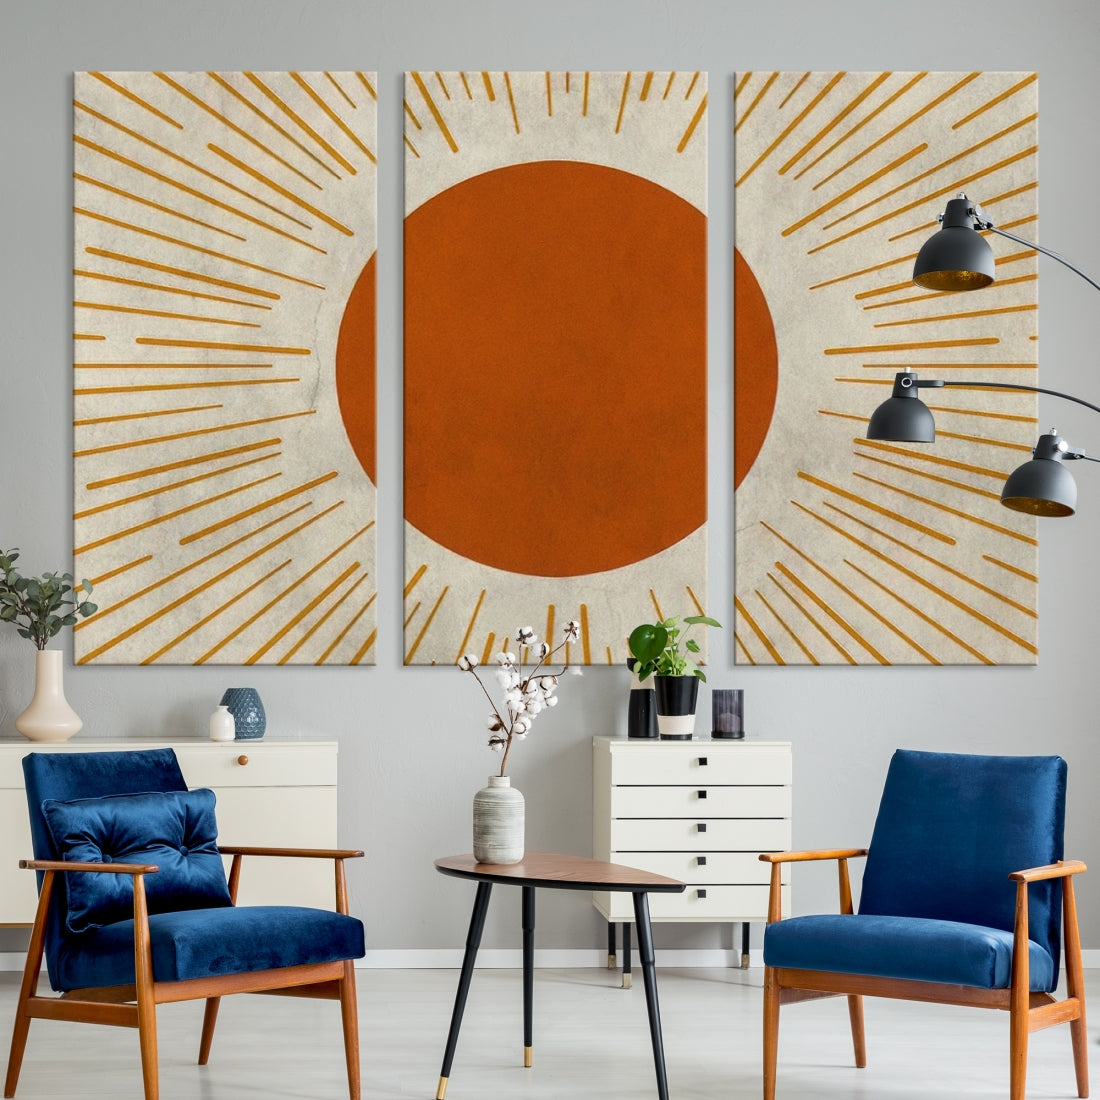 3 Piece Framed Canvas Wall Art Sun with Rays Prints Mid Century Modern Home Artwork Neutral Boho Decor for Bedroom